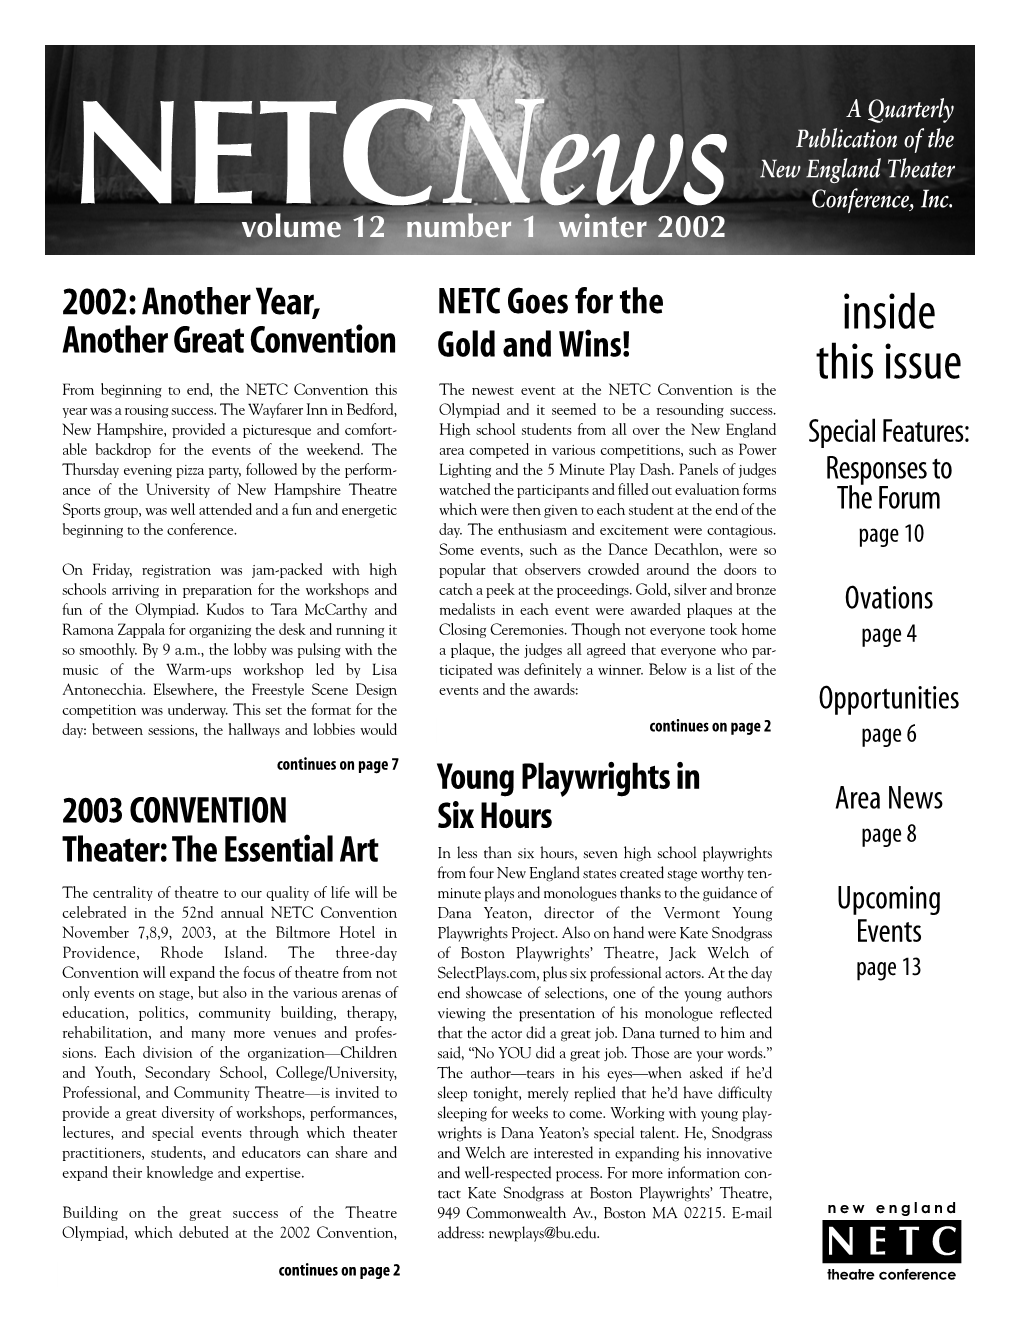 NETC News, Vol. 12, No. 1, Winter 2003